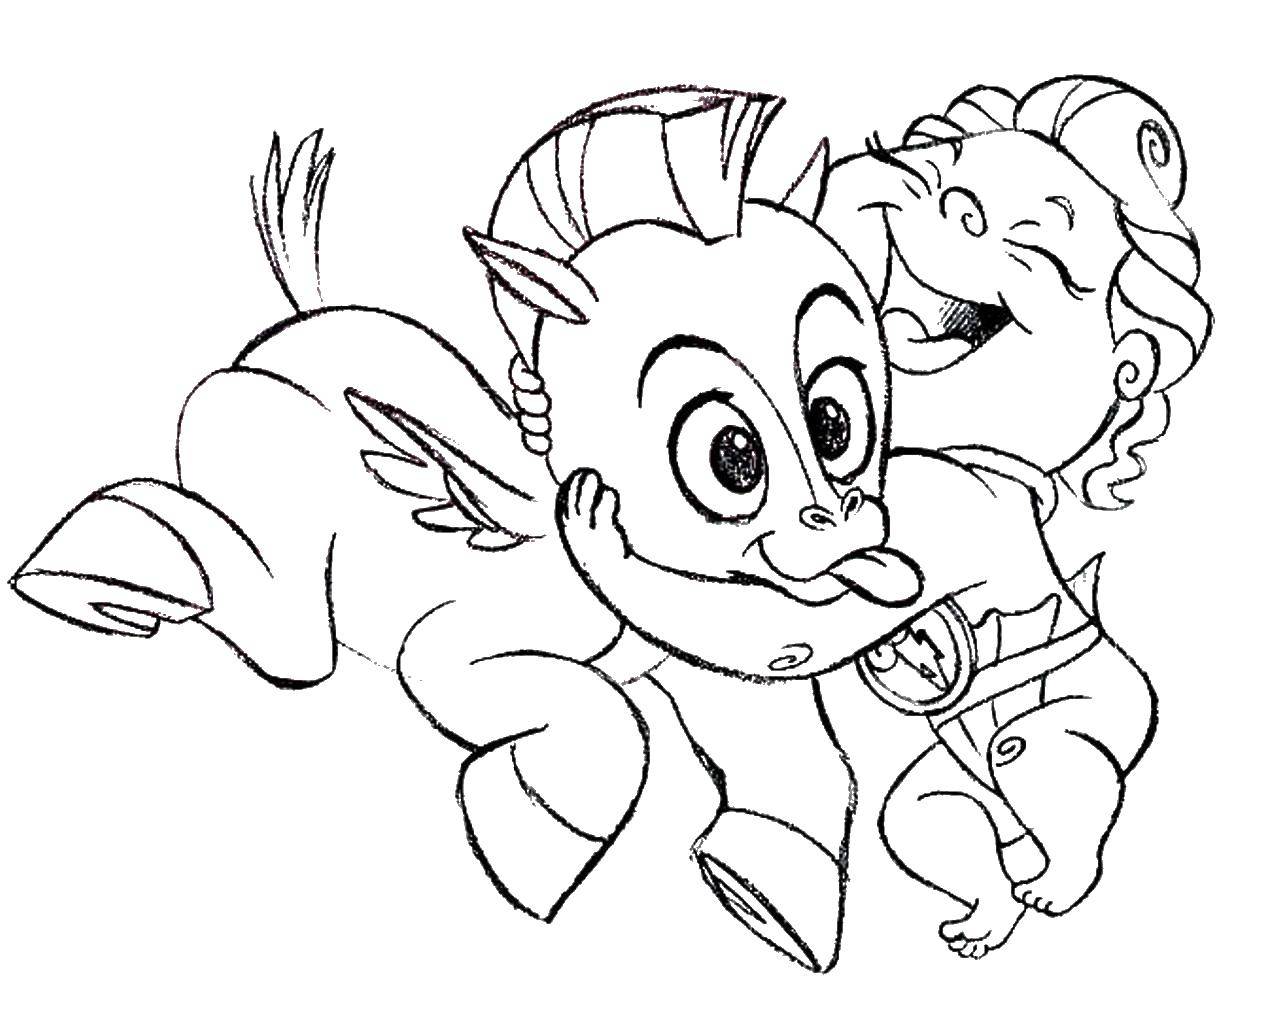 Coloring Baby Hercules and Pegasus. Category coloring. Tags:  Cartoon character.